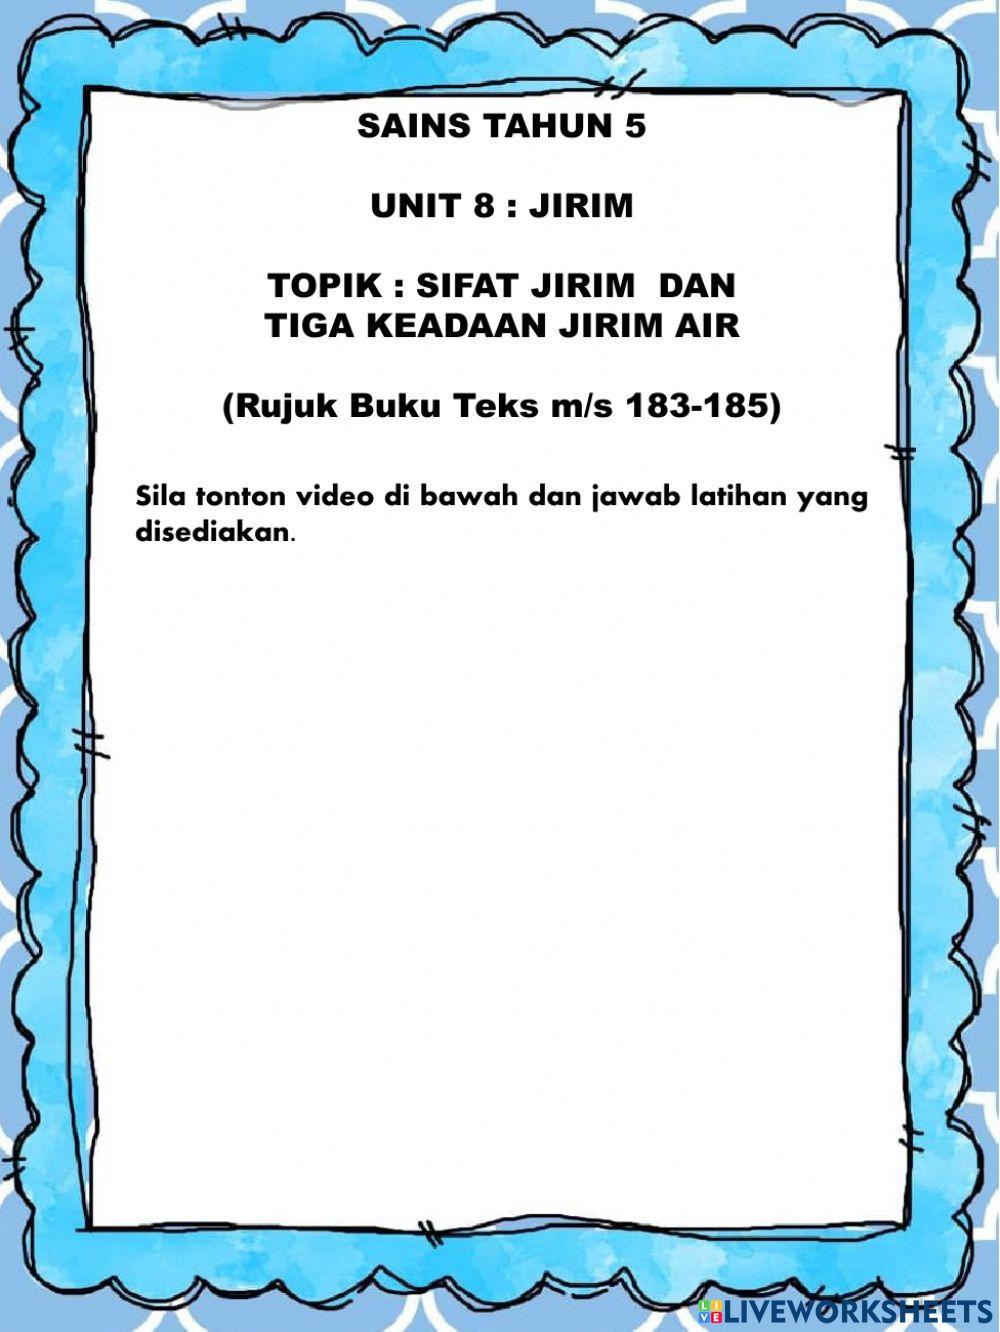 Jirim